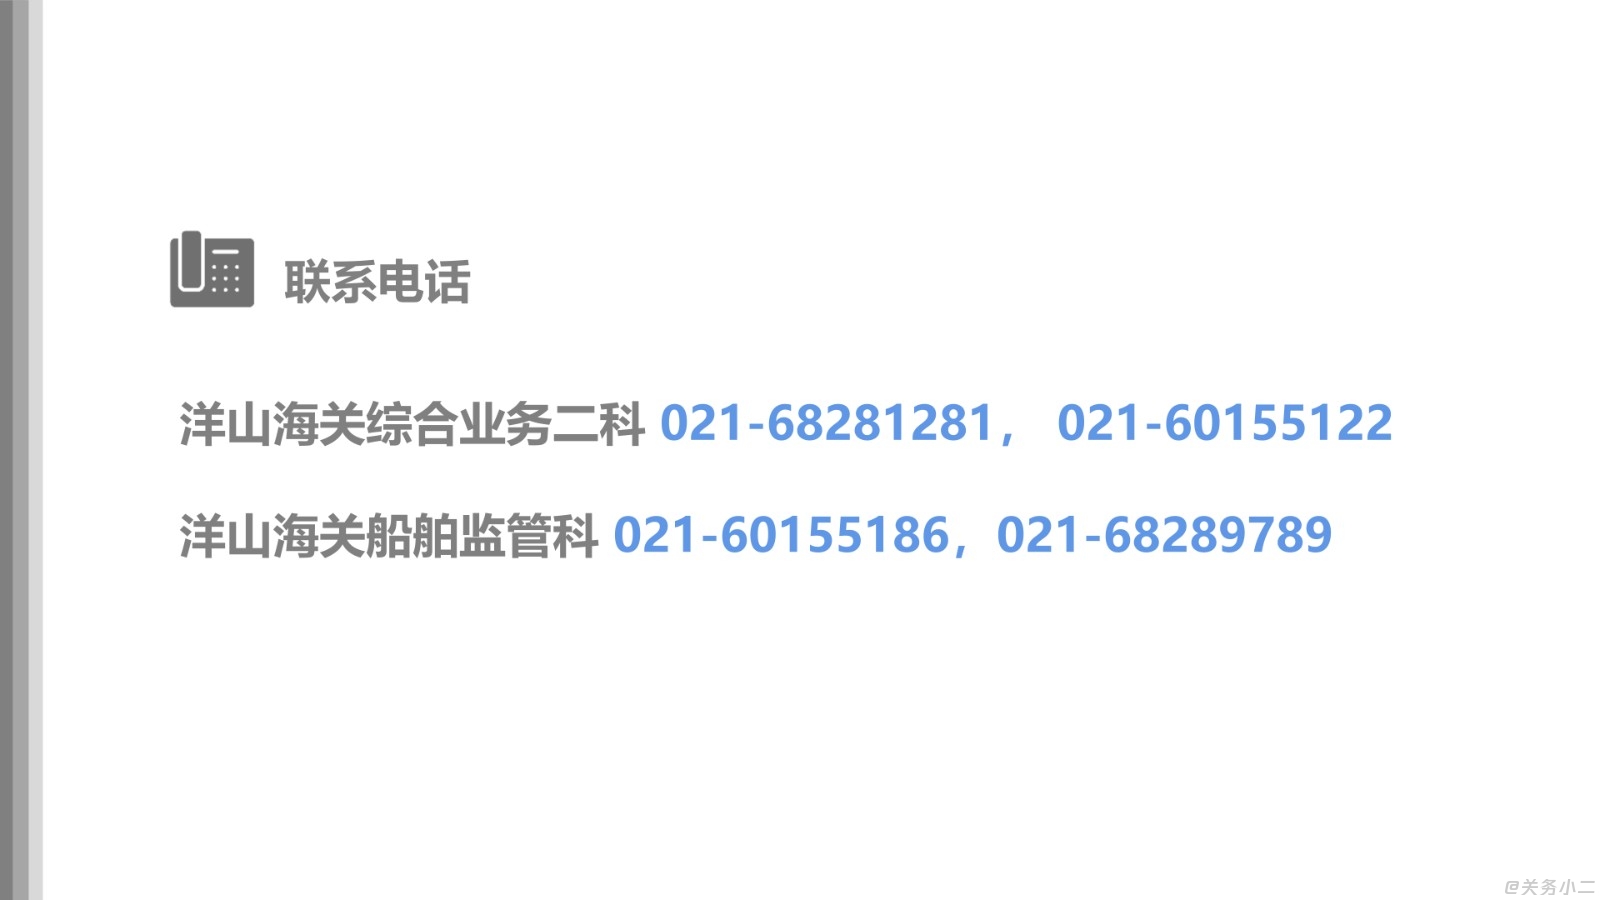 PPT-上海海关海运出口放行信息切换安排宣贯会_14.jpg